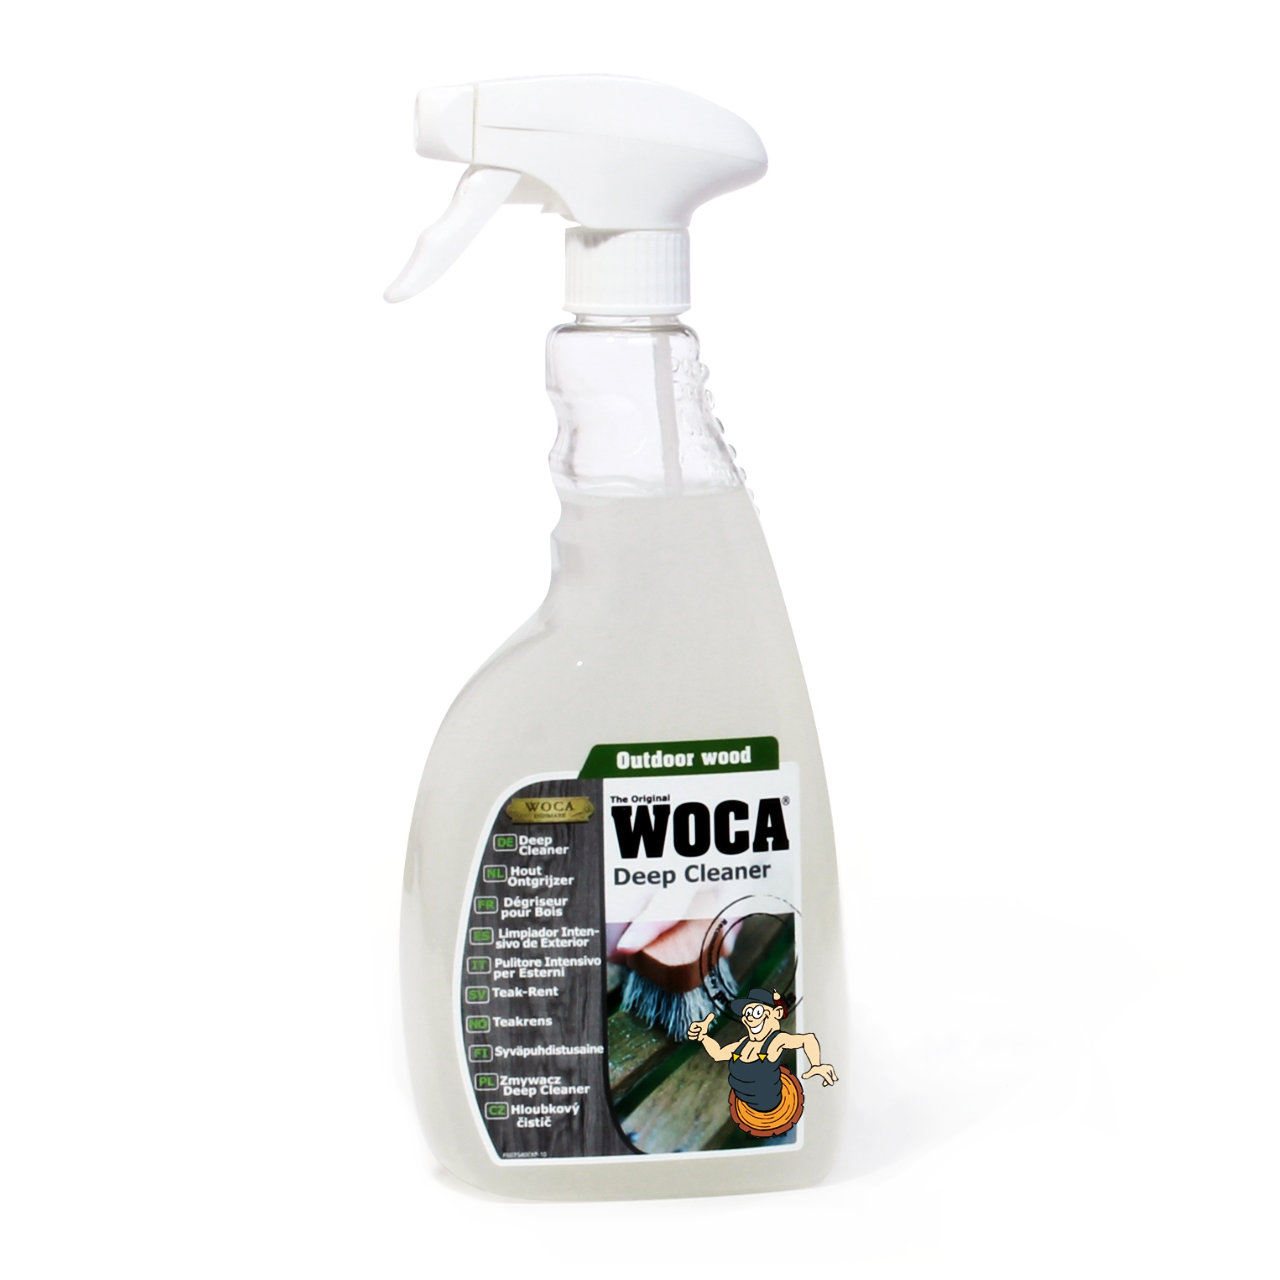 WOCA Deep Cleaner 2 in 1